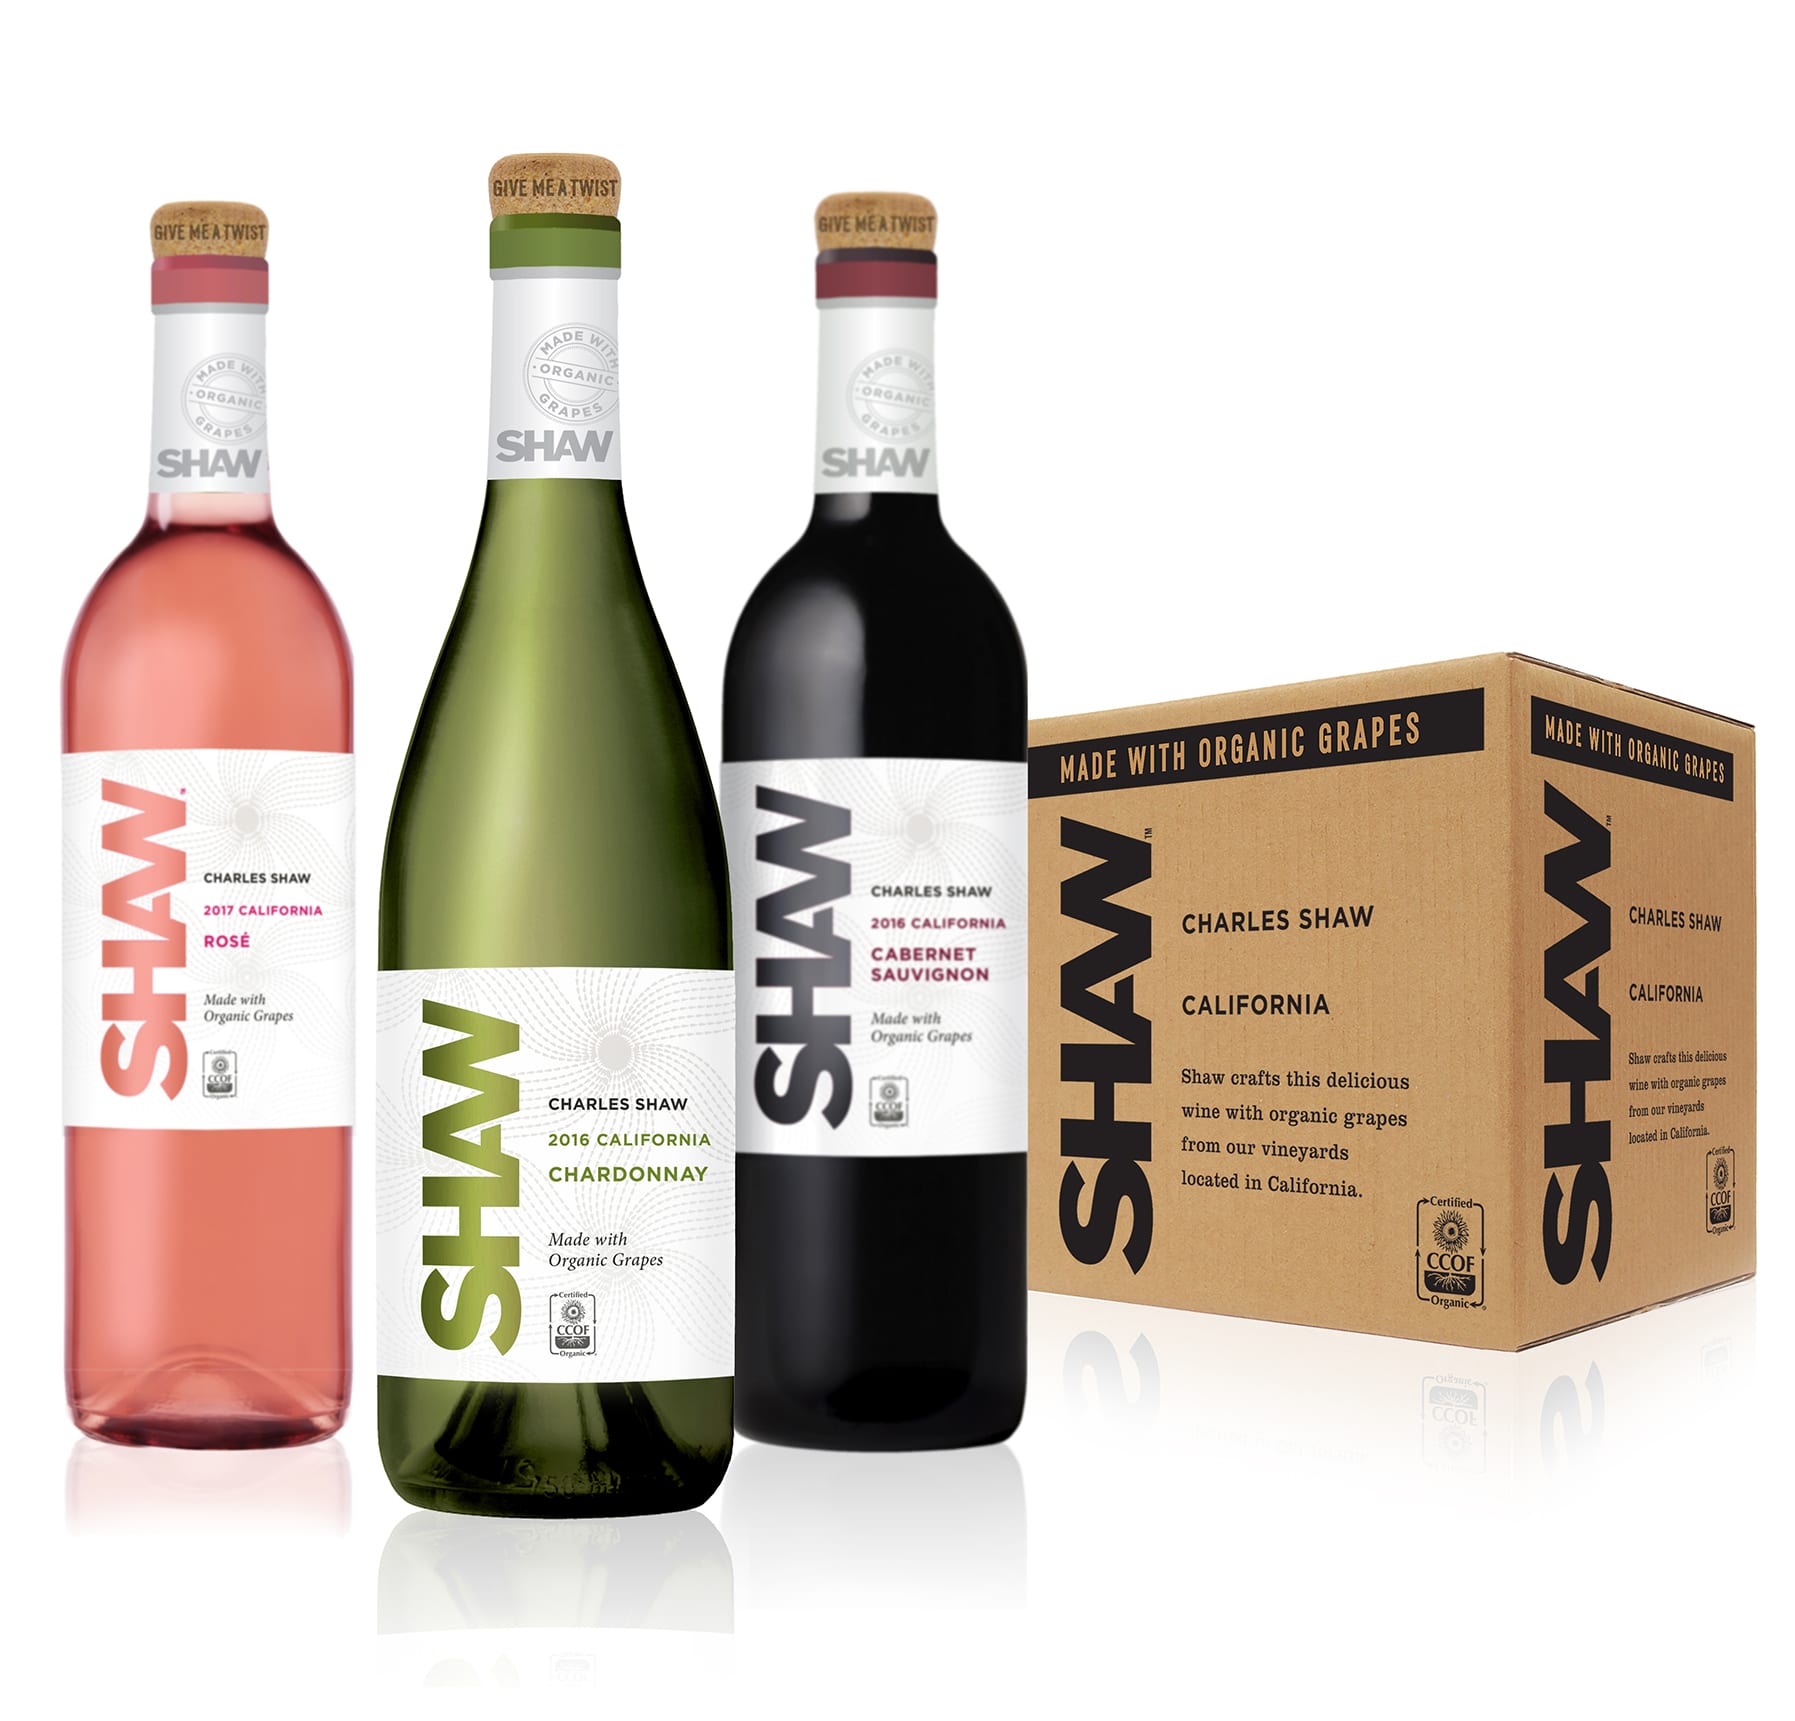 Shaw Organic Wine